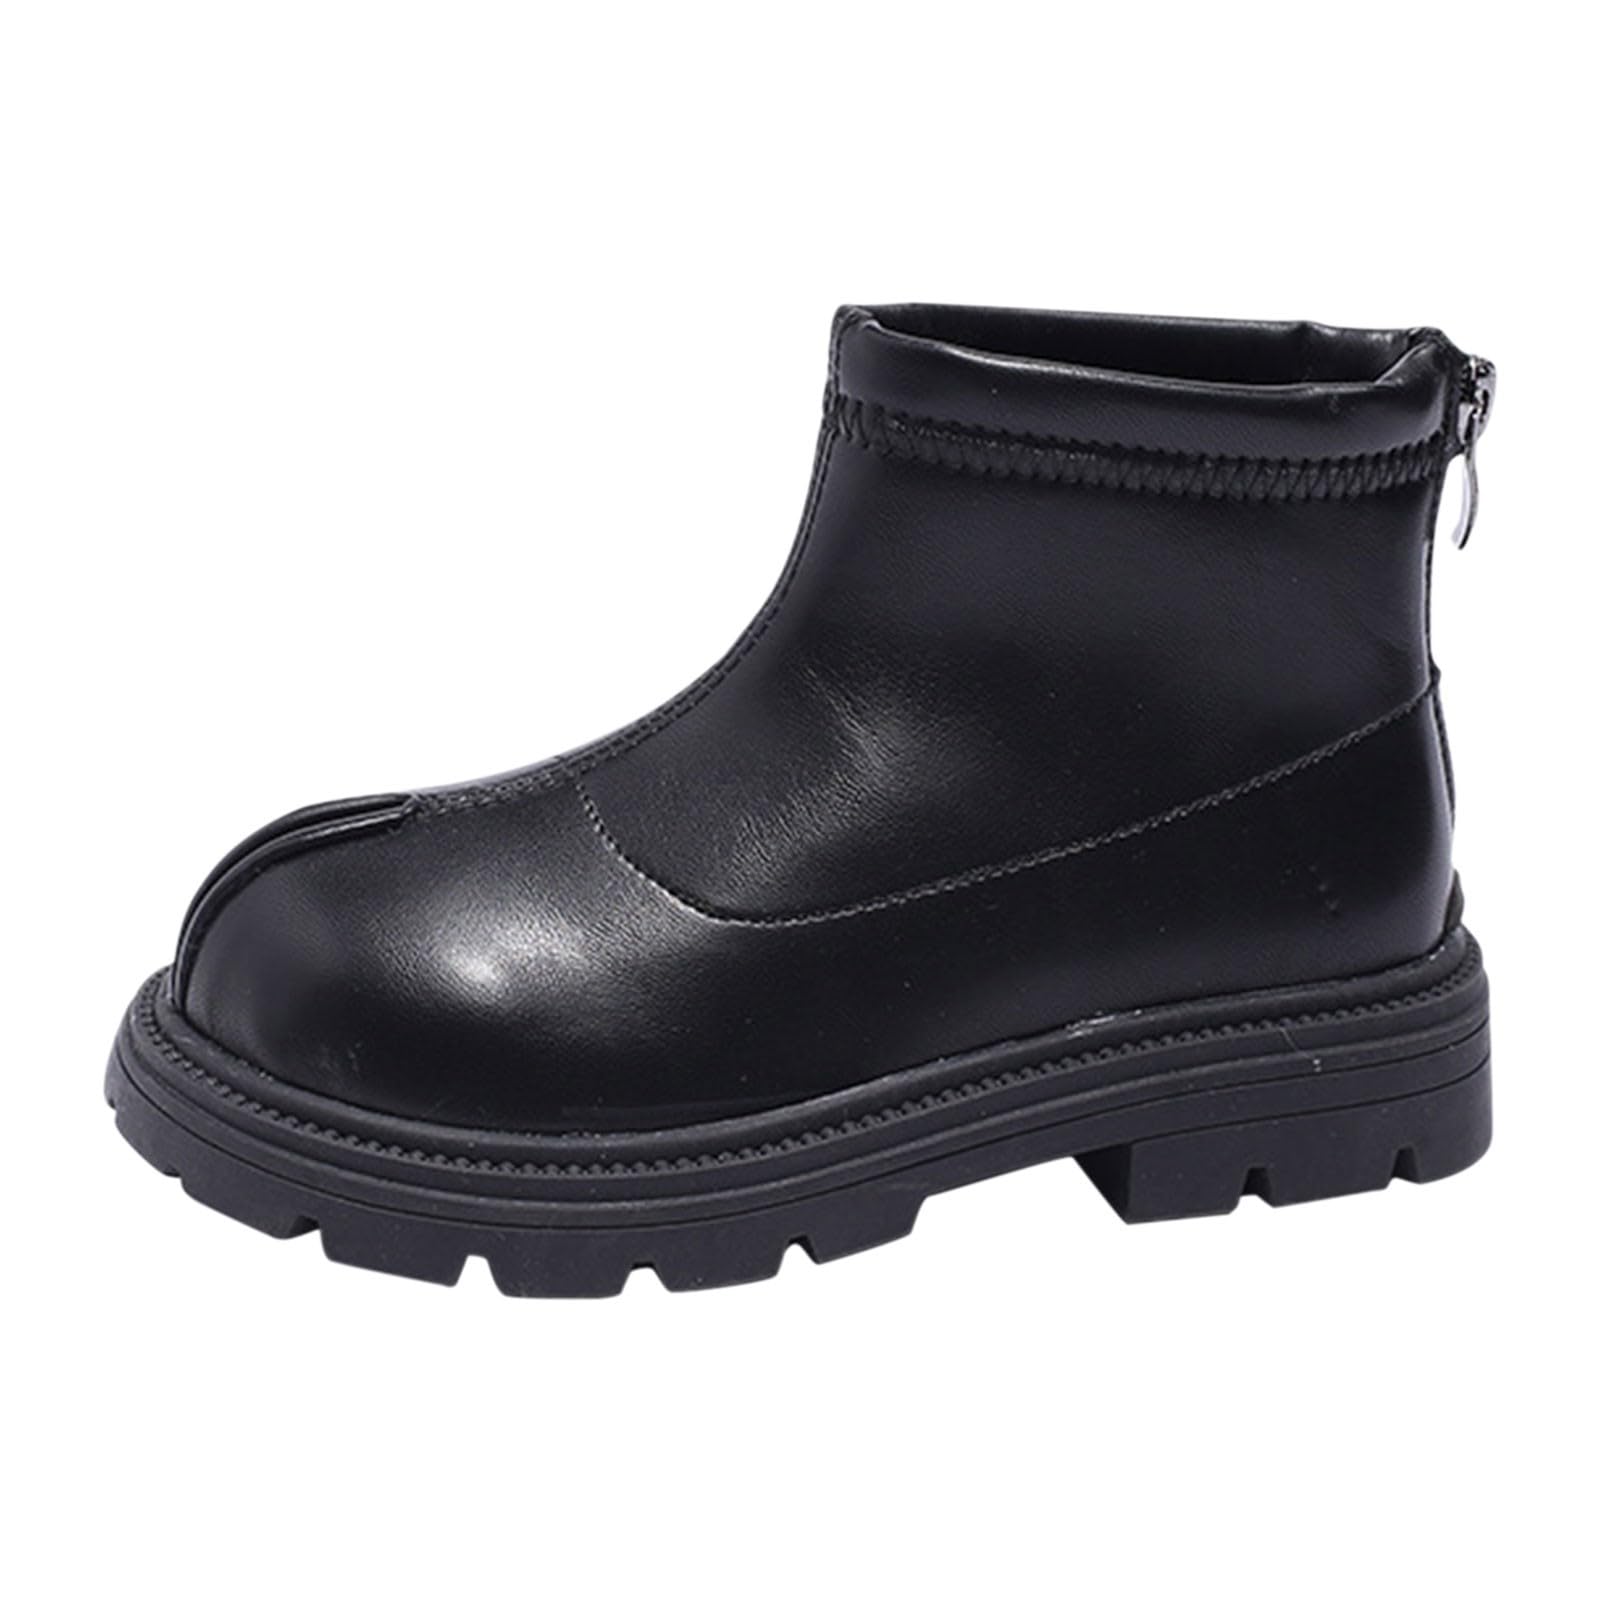 Girls Rain Boots Insulated Black Platform Booties For Toddler Girls Front Zipper Cheer Shoes 3 Toddler Girls Boots